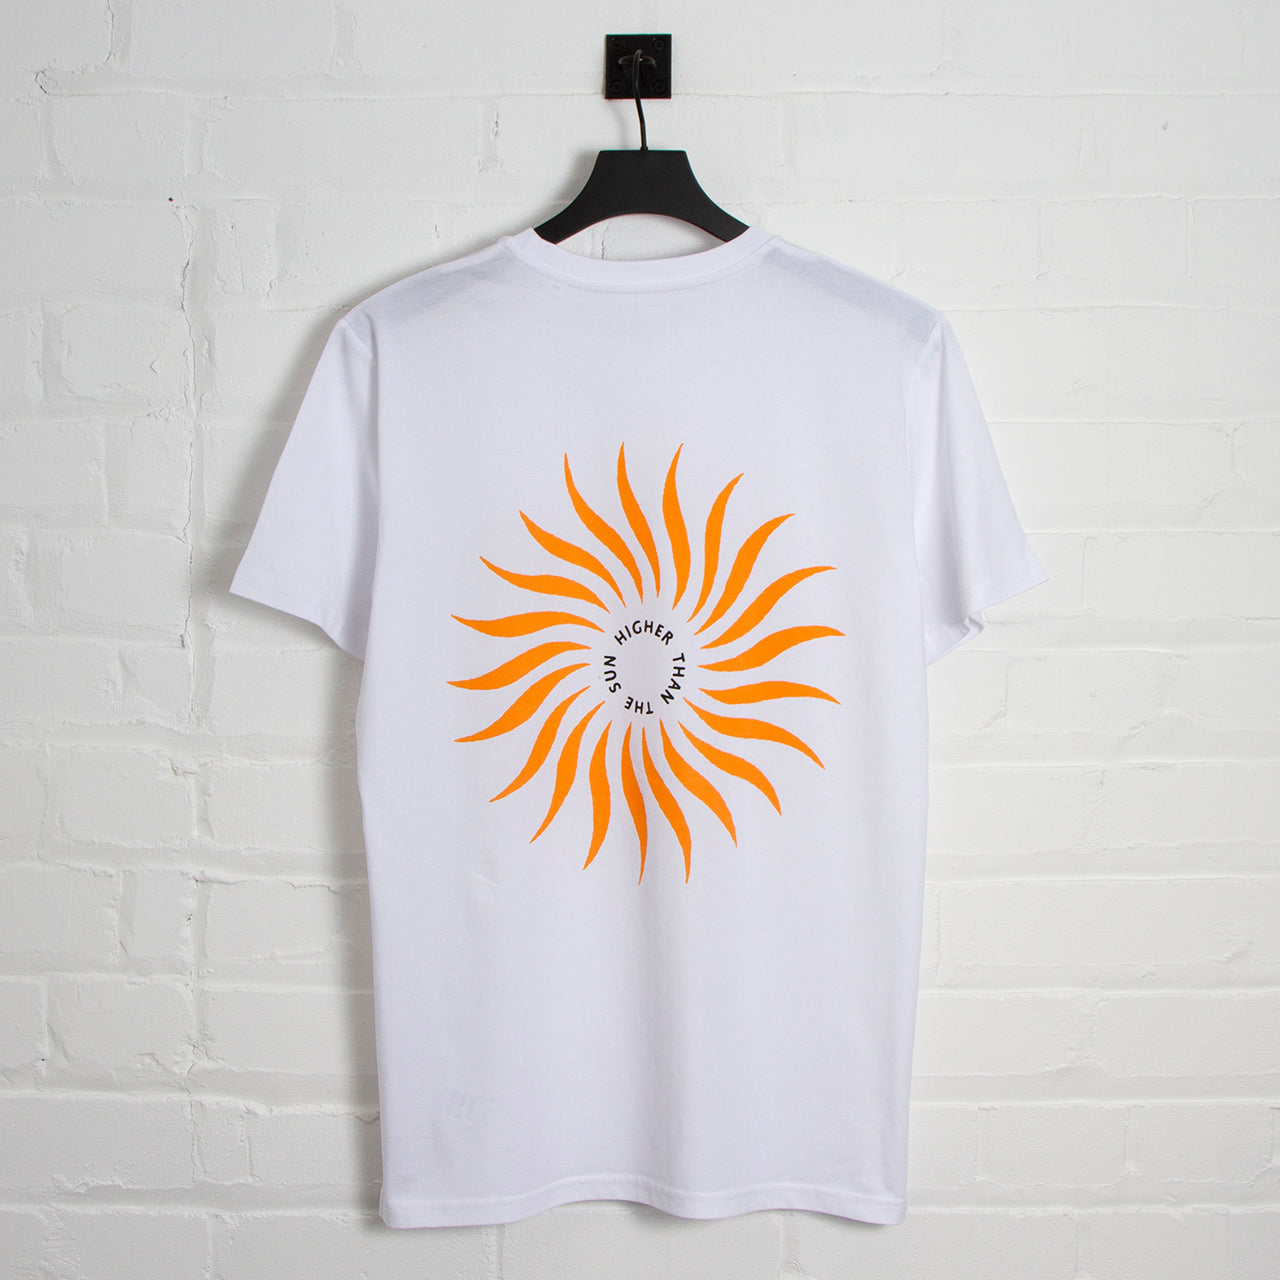 Higher Than The Sun Back Print - Tshirt - White